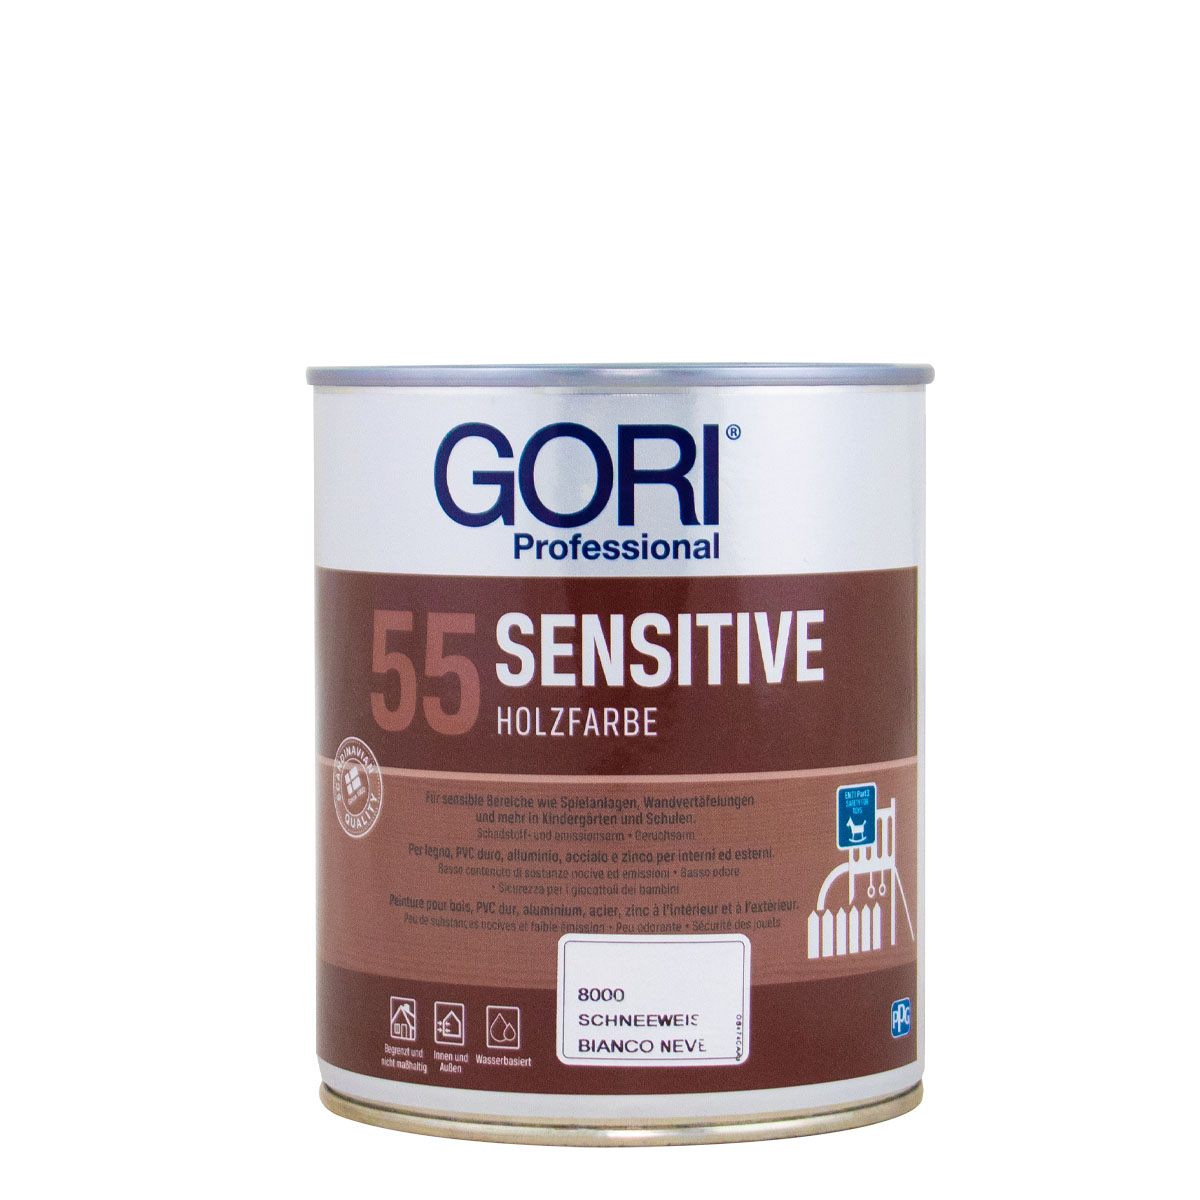 Gori 55 Sensitive Holzfarbe 0,75L, 8000 schneeweiss, Holzschutzfarbe